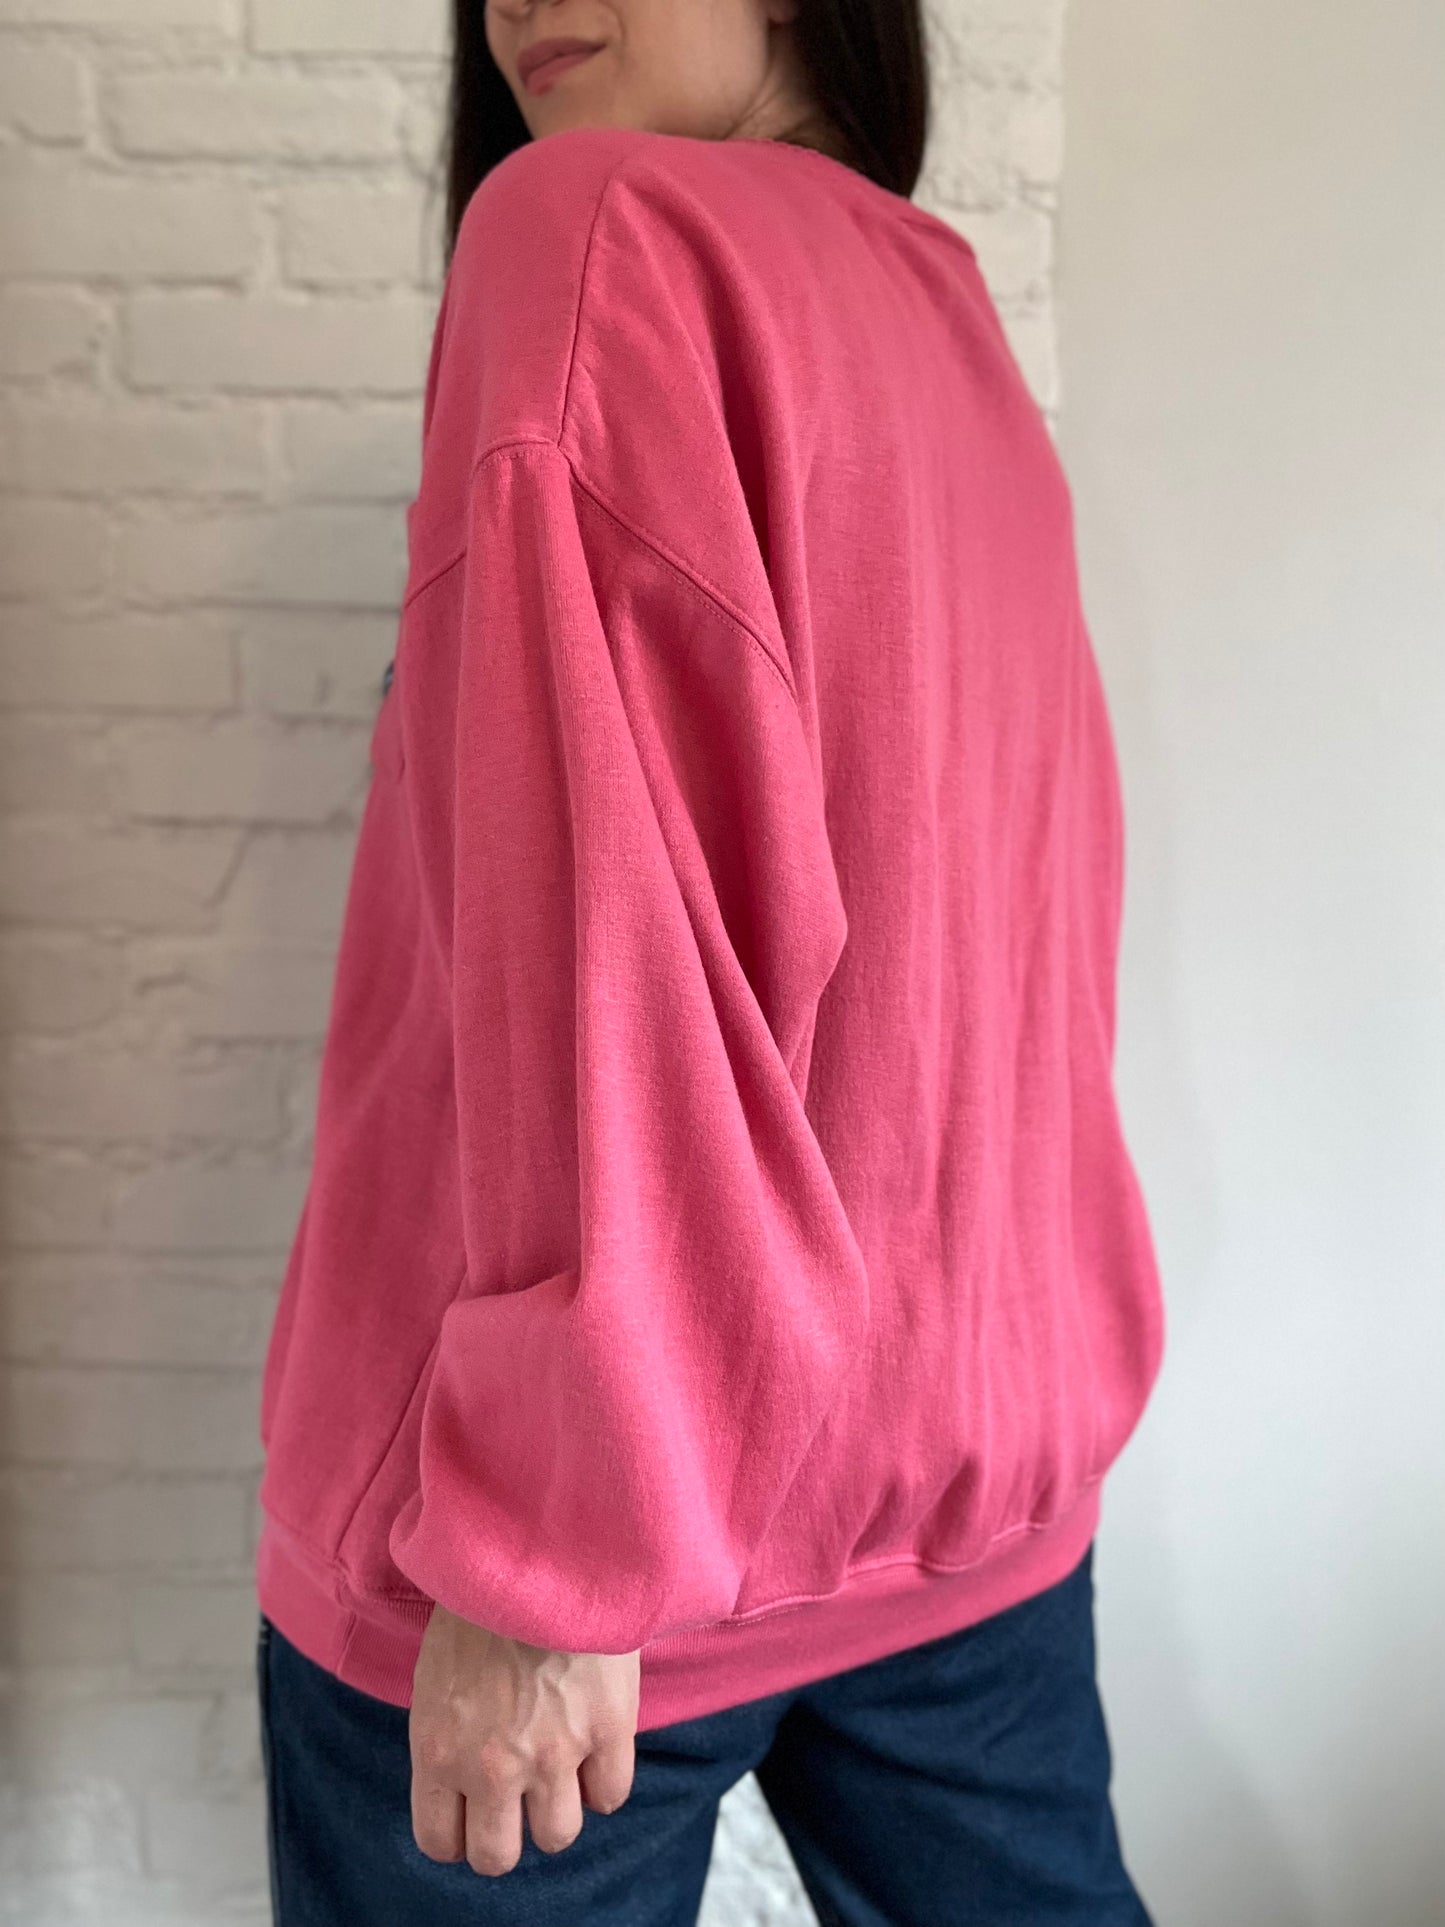 90s Cottage Core Pink Sweater - Size XL/XXL